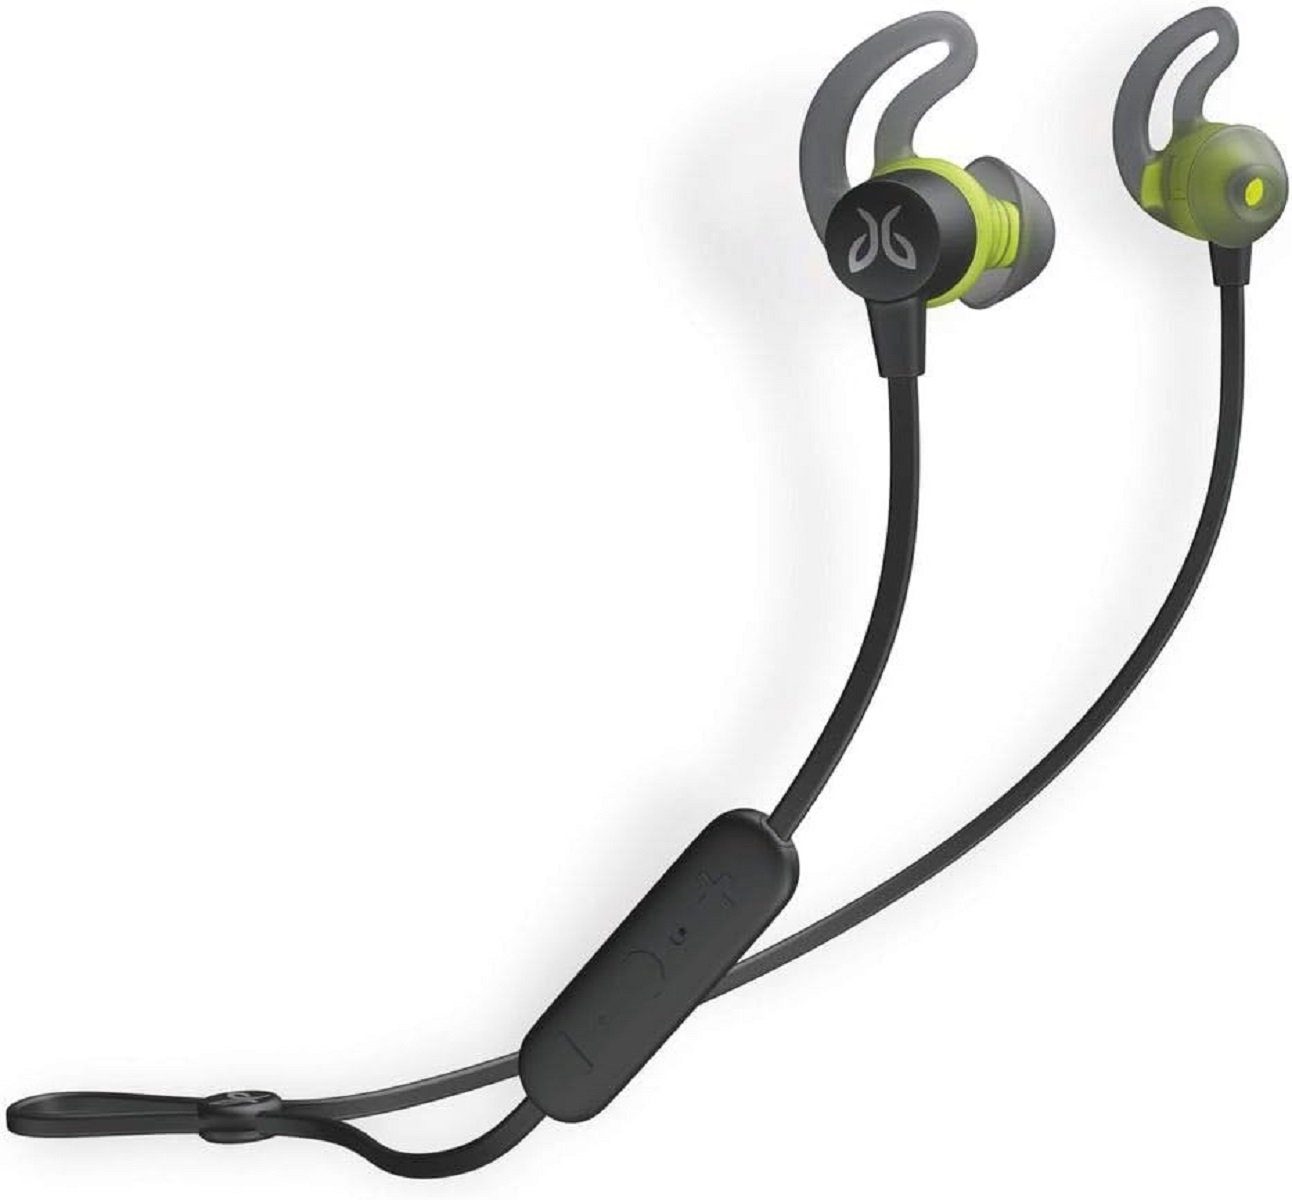 Kopfhörer, In-Ear Schweißbeständig Tarah Wireless Bluetooth, Jaybird Sport-Kopfhörer